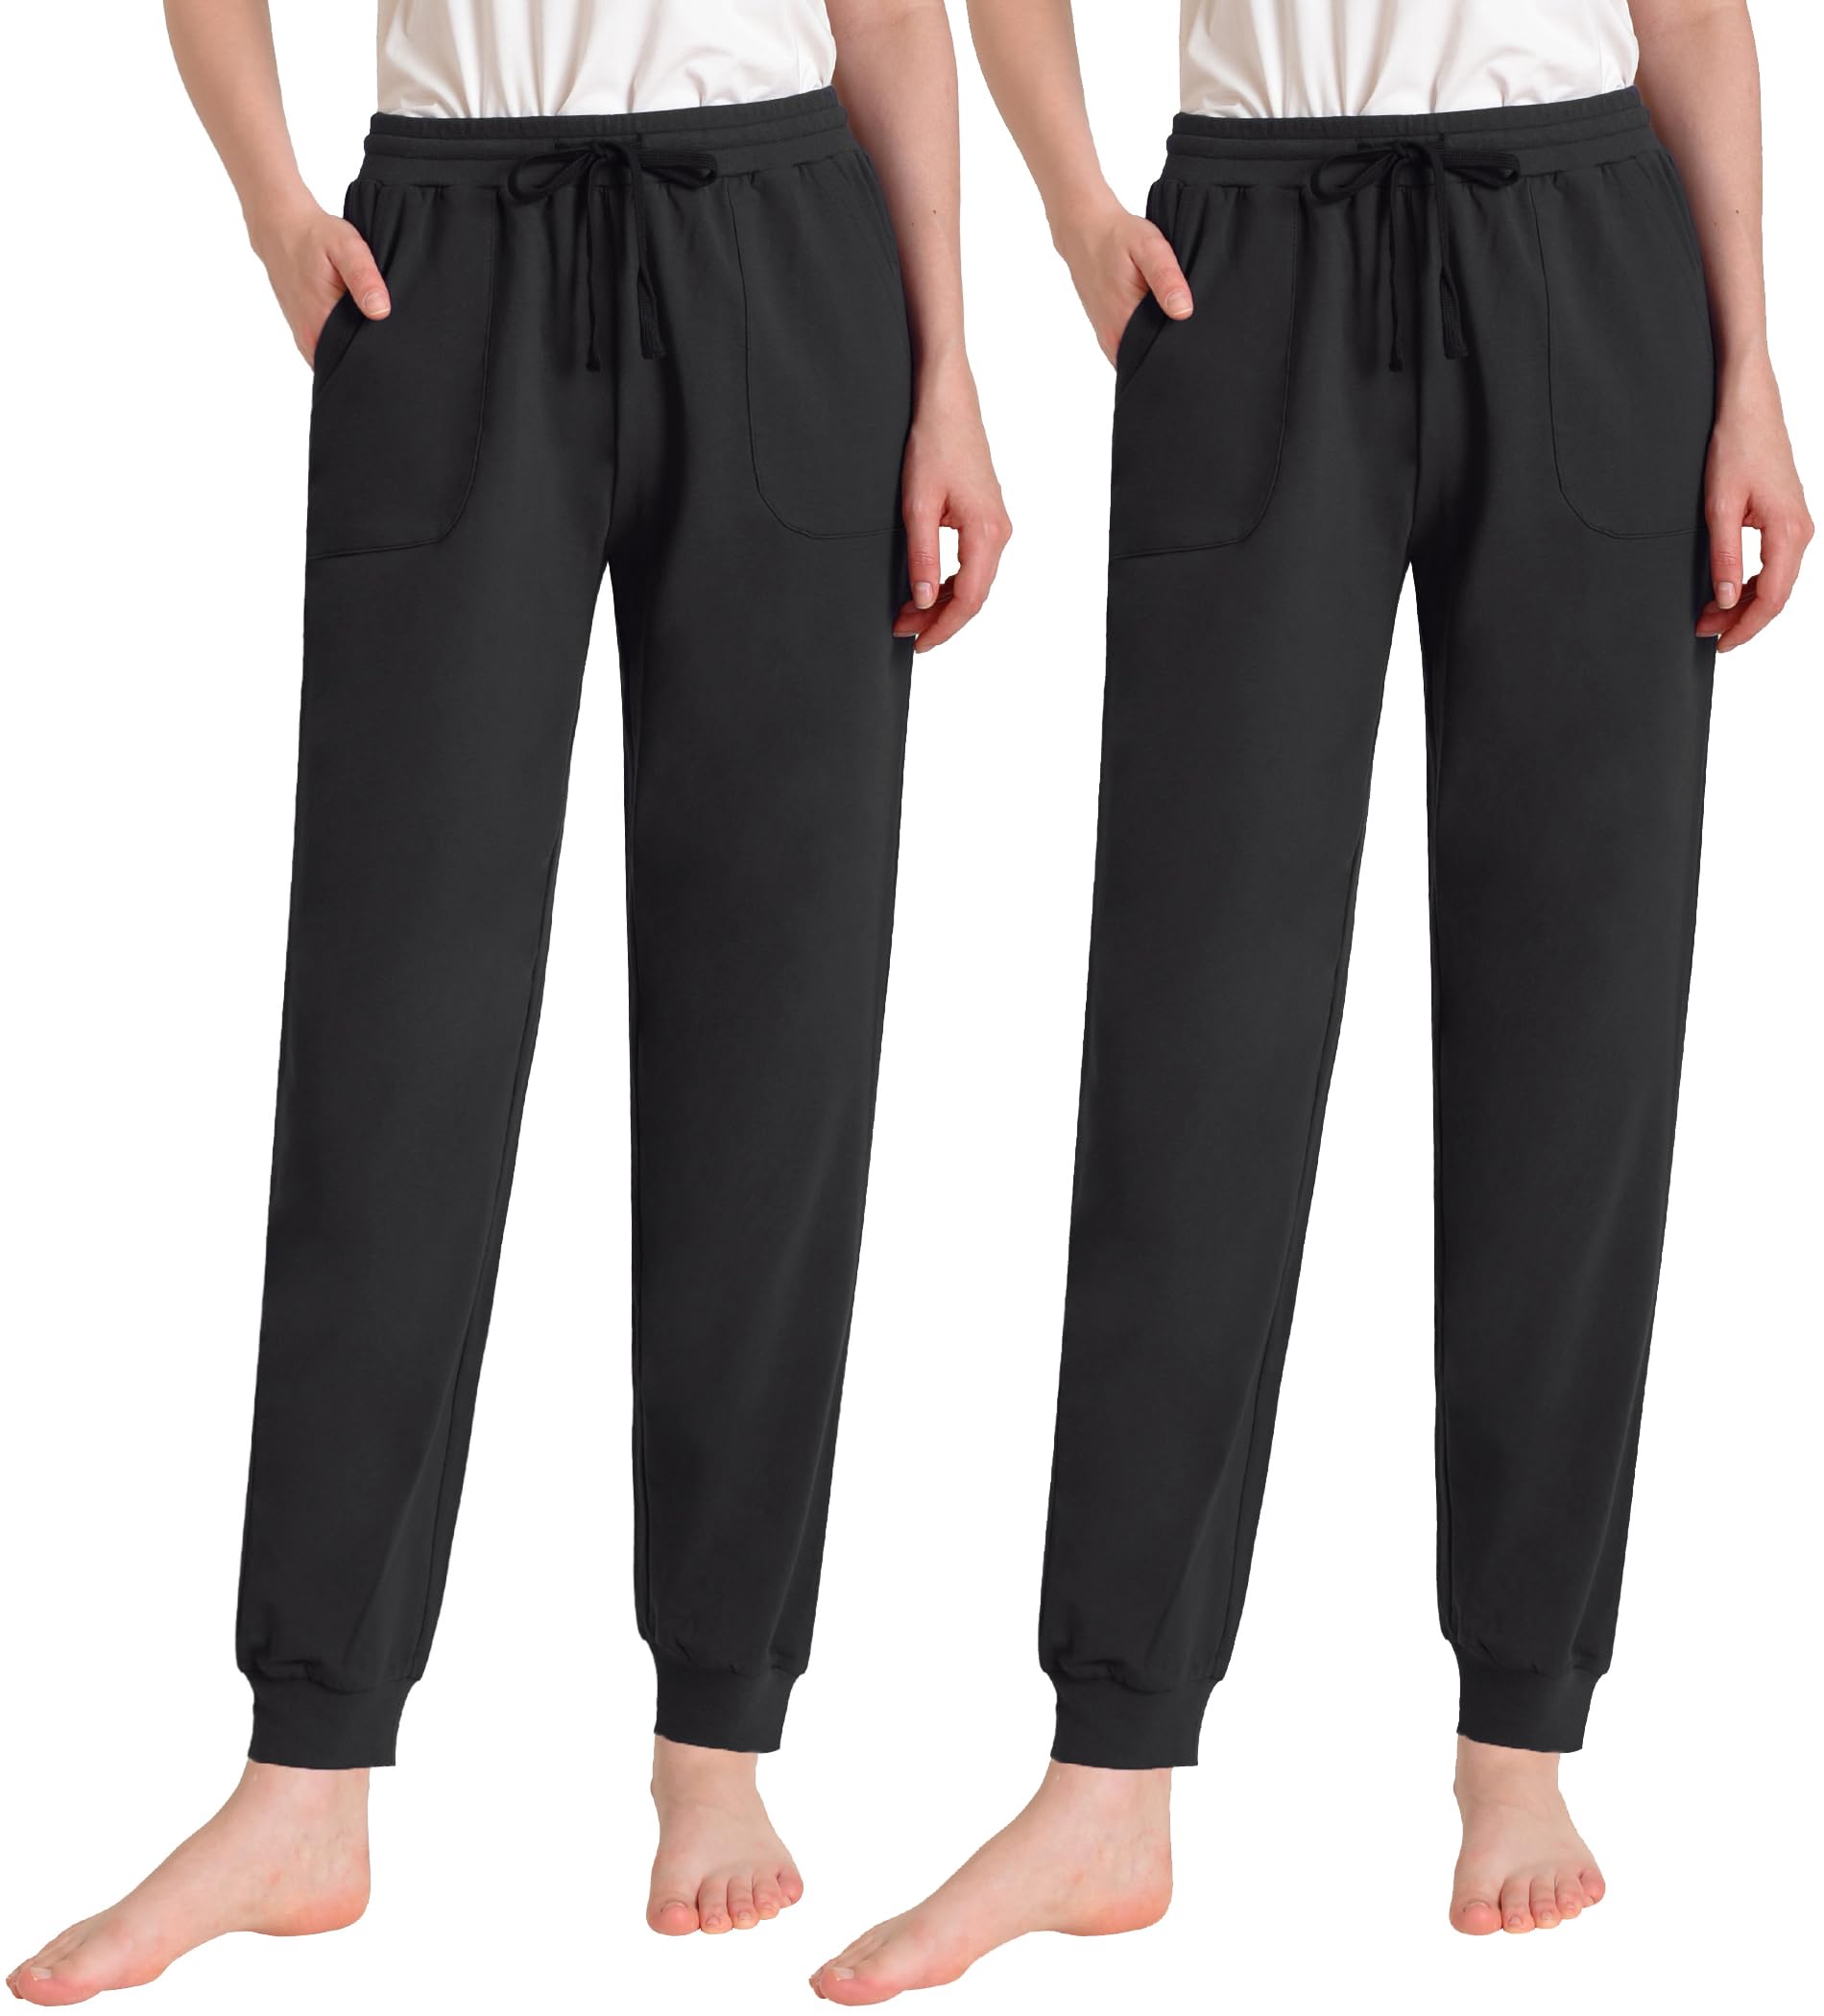 Women's Lounge Pants with Pockets Comfy Cotton PJ Bottoms